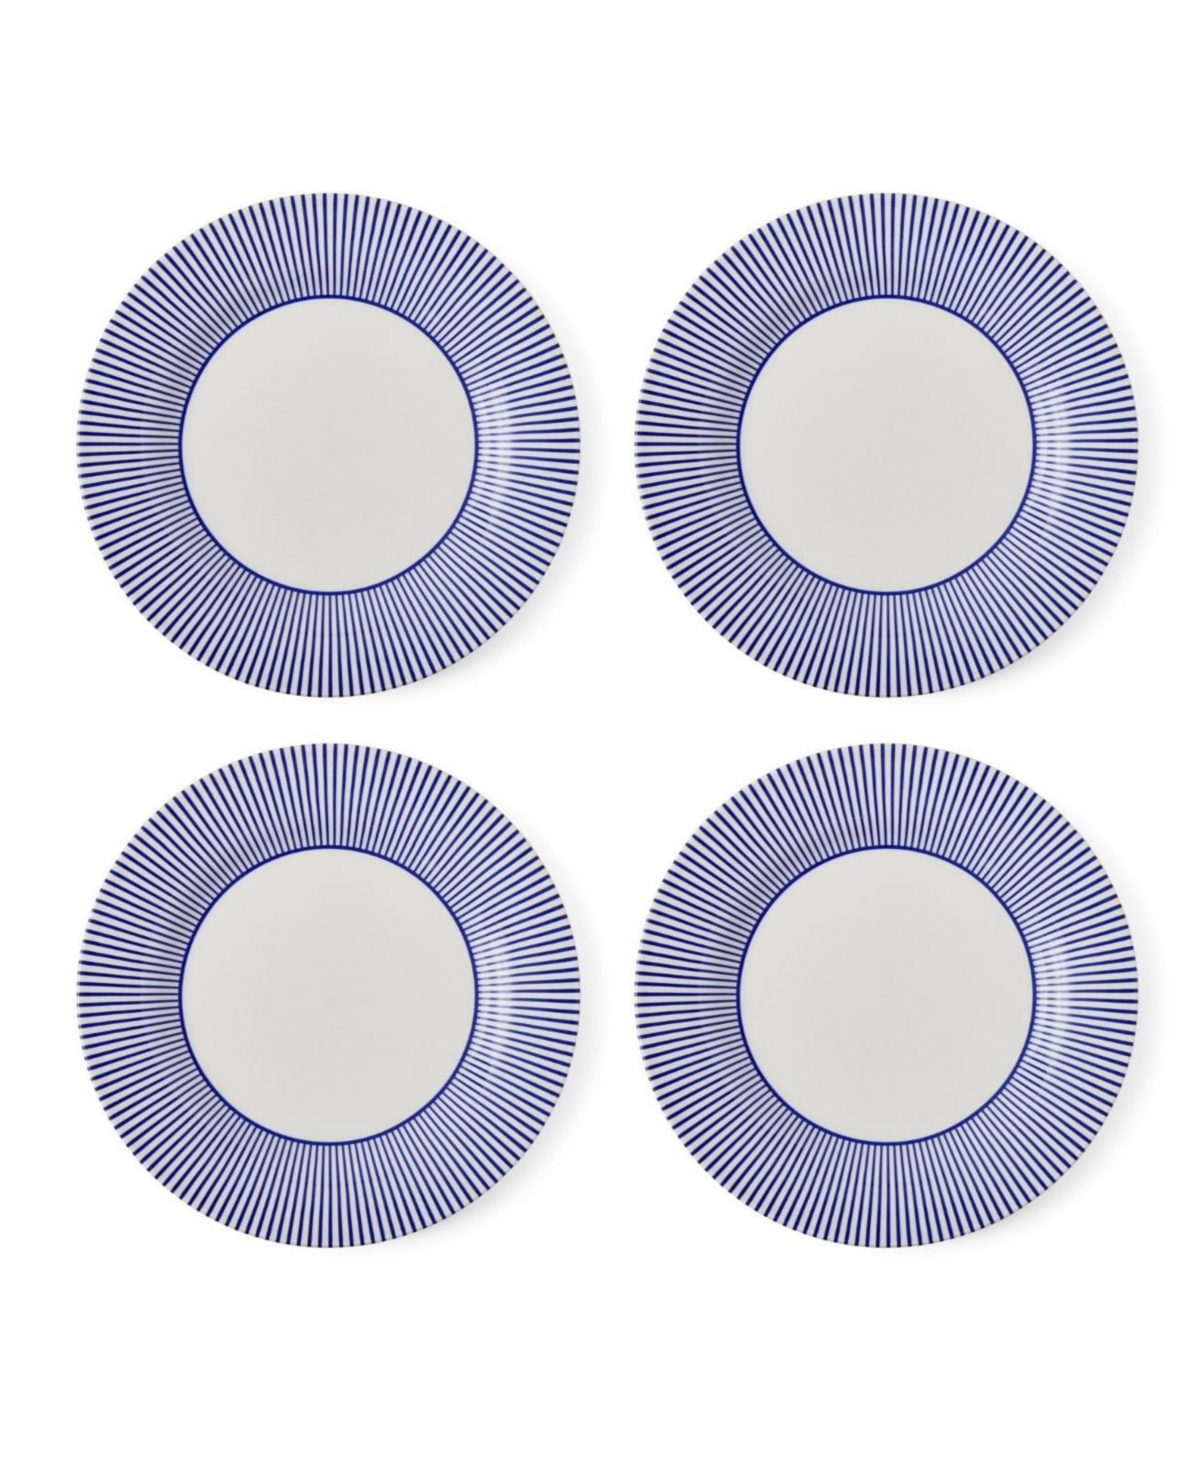 Blue Italian Steccato Dinner Plates, Set of 4 - Blue